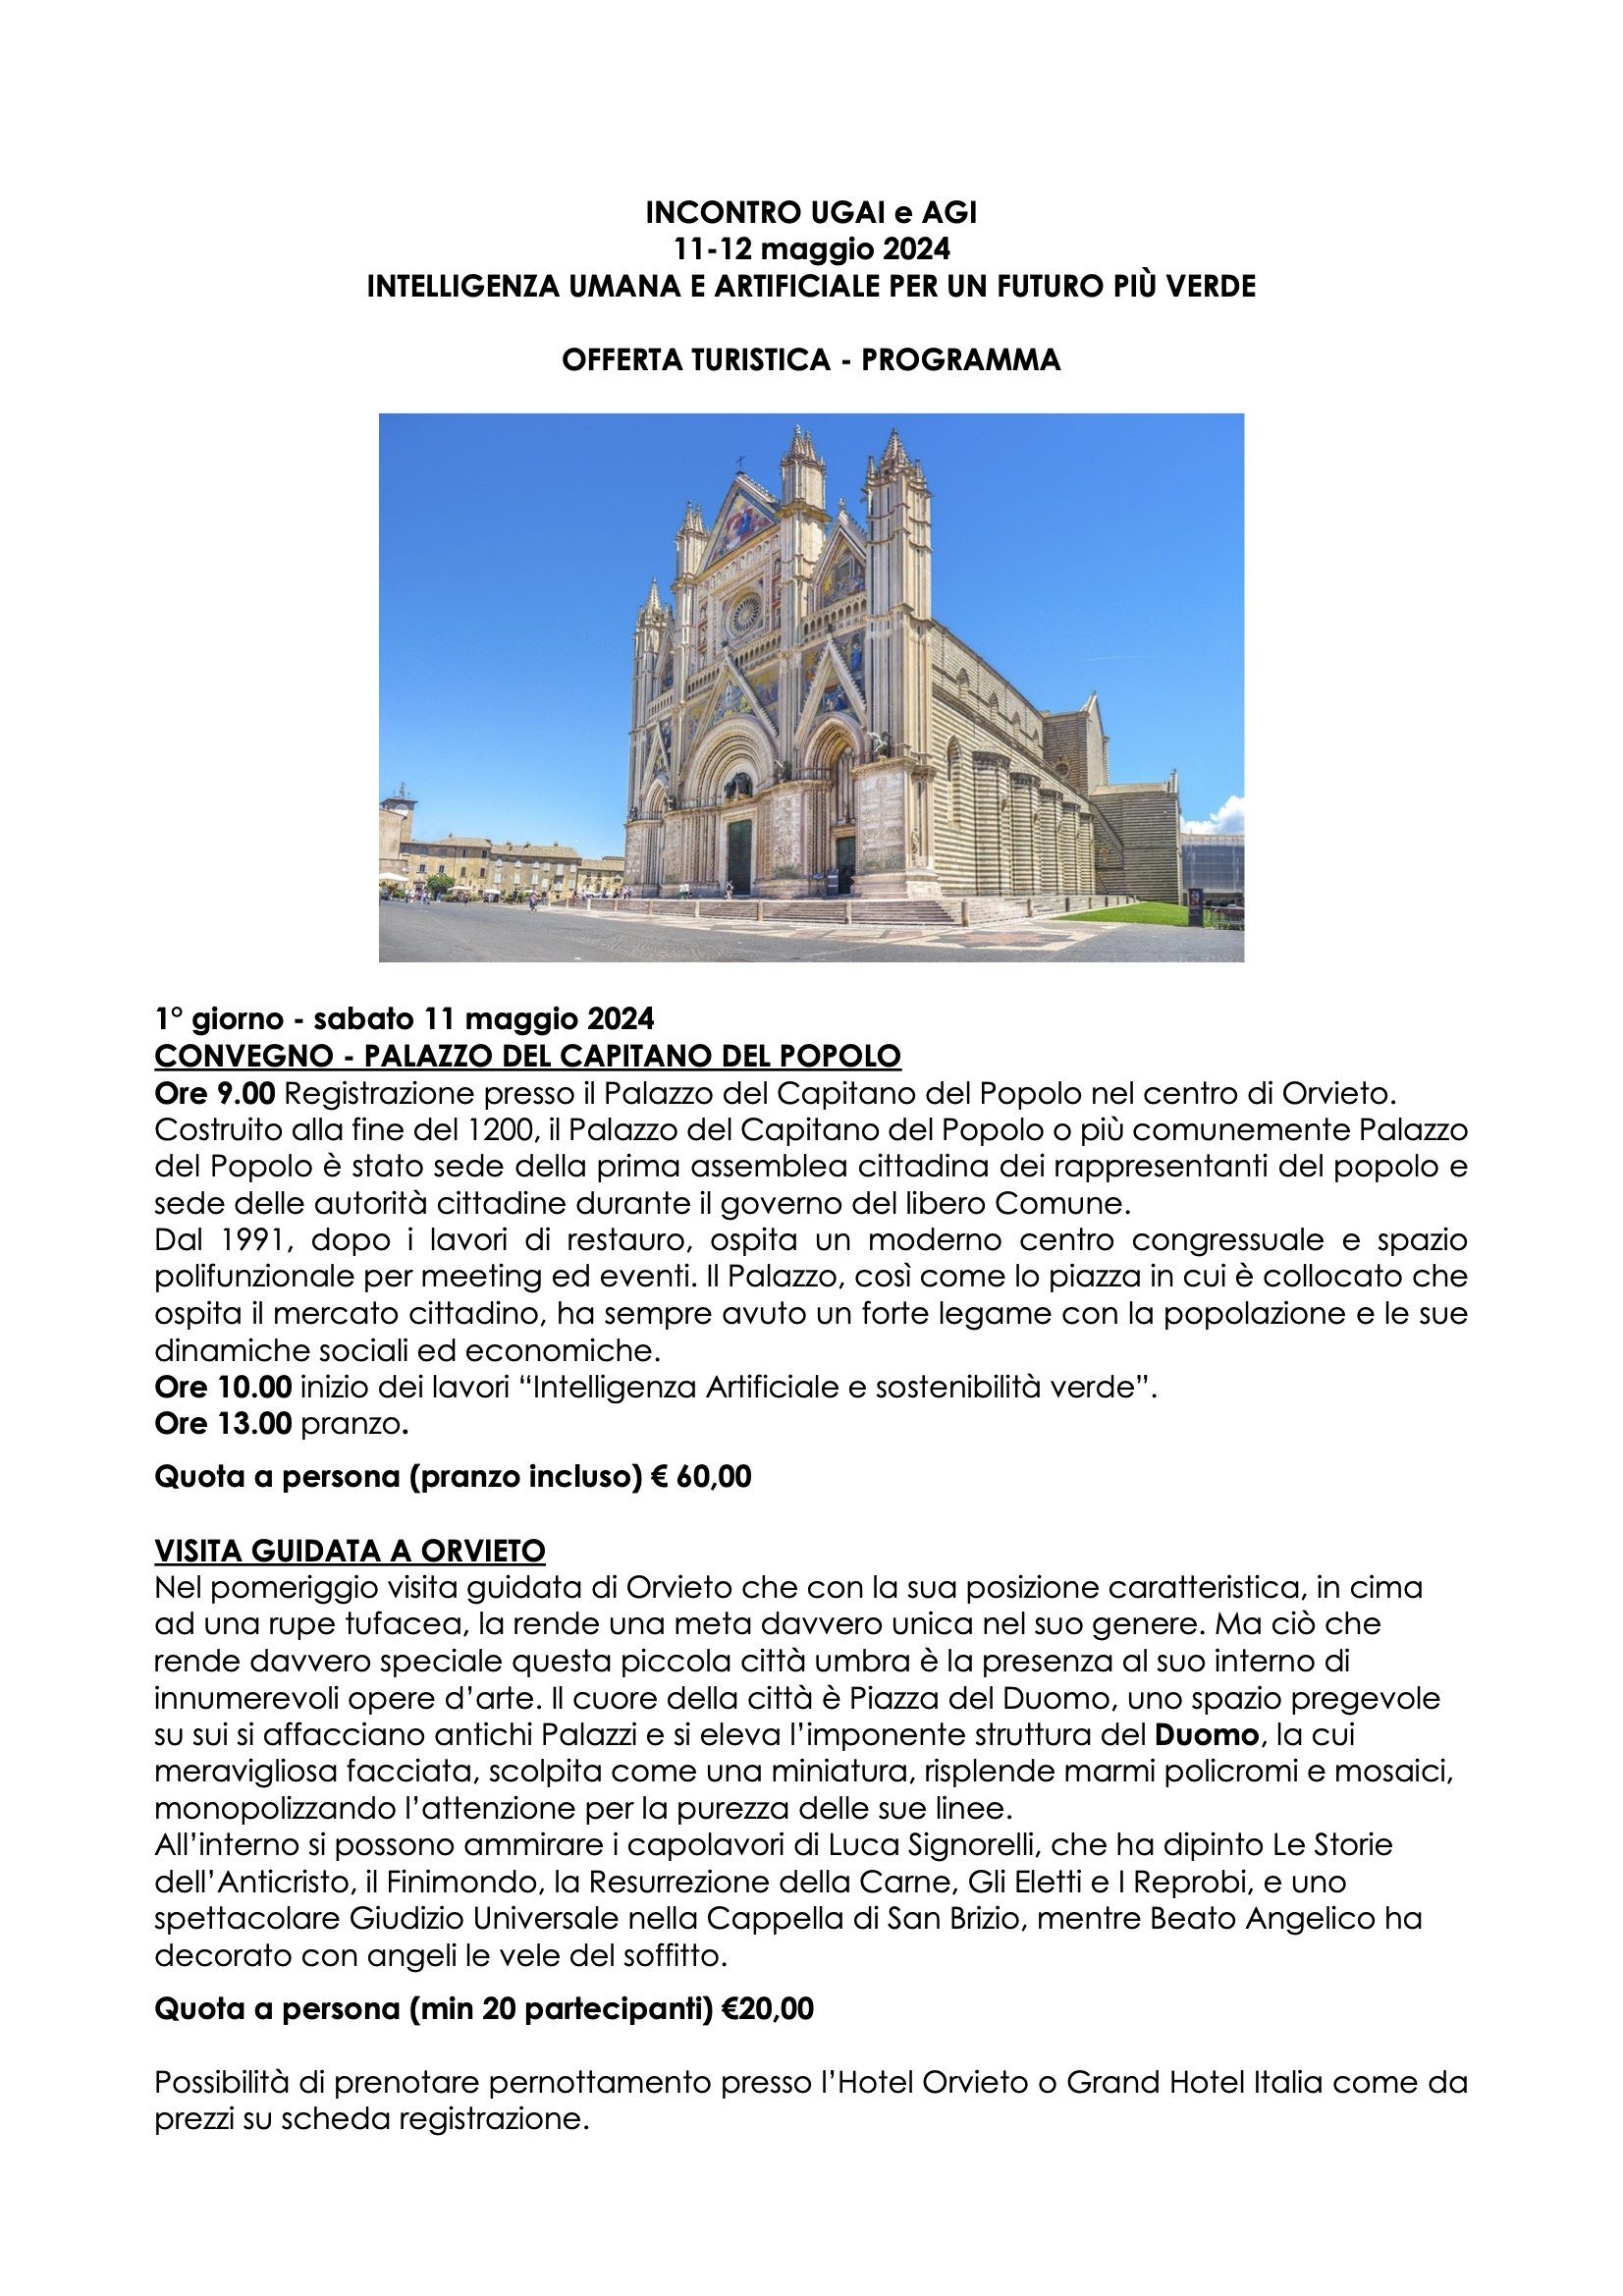 Orvieto-offerta turistica-final1.jpg